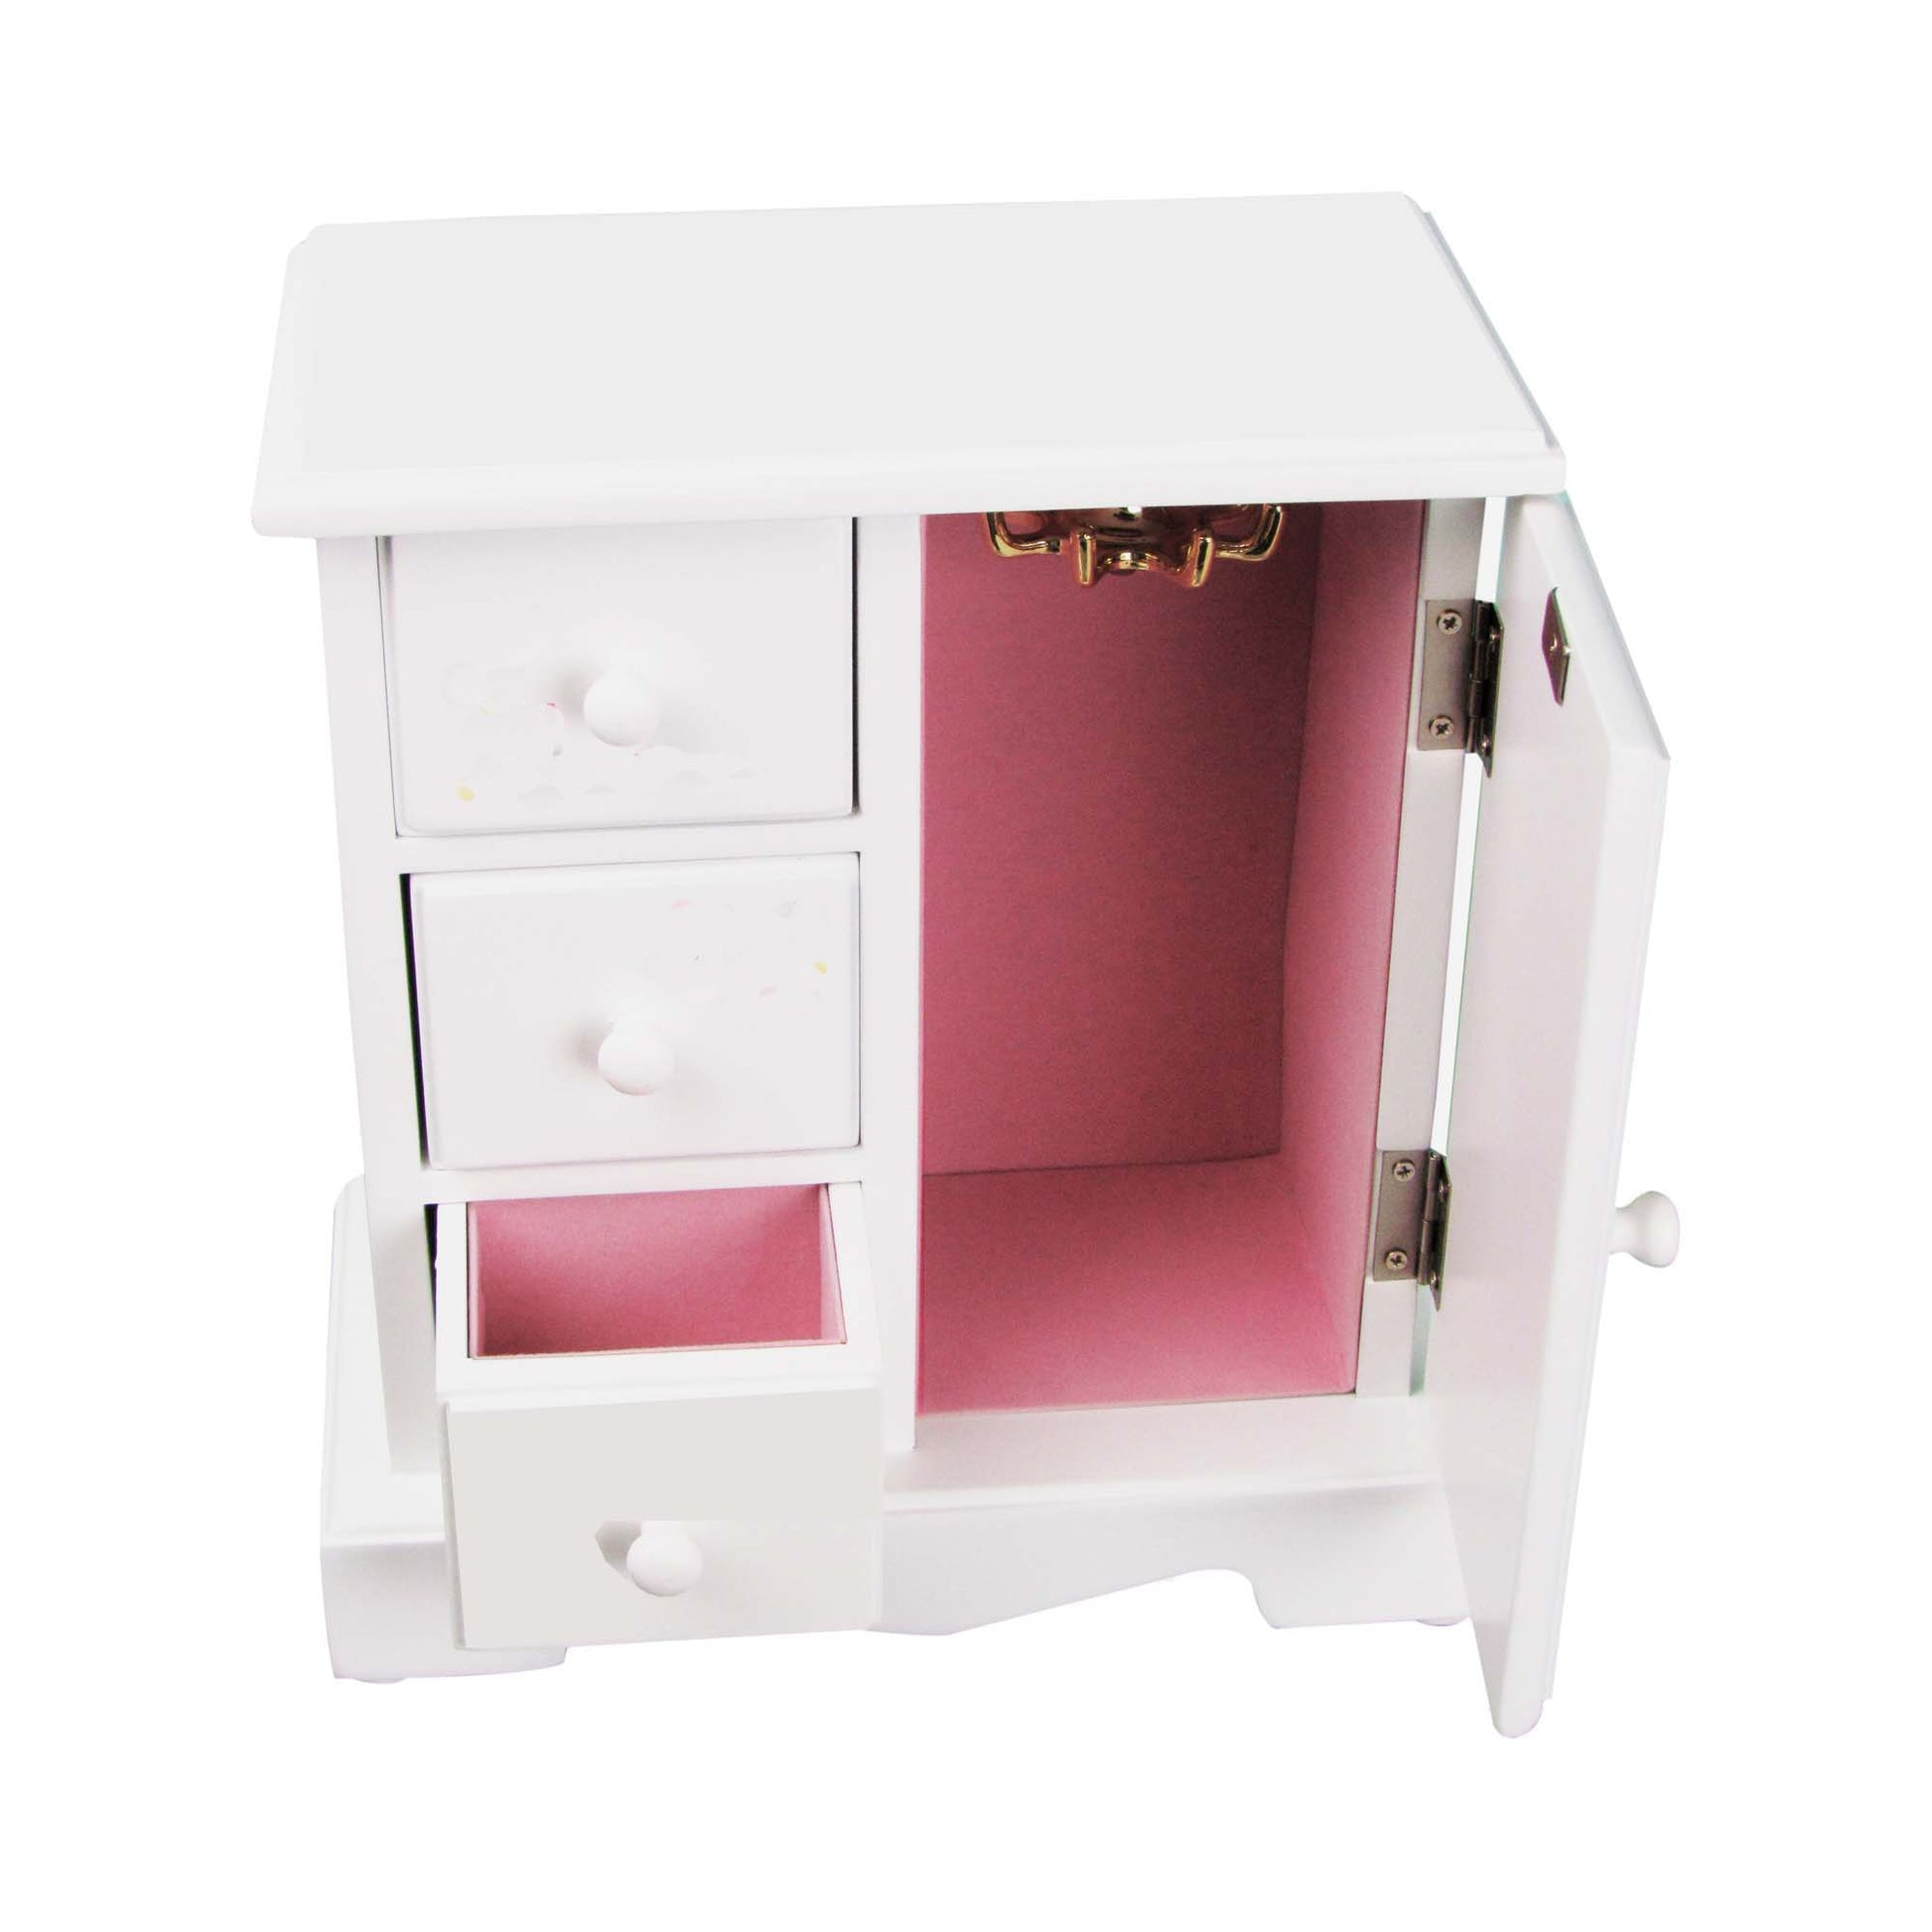 personalized pink ladybug jewelry box armoire